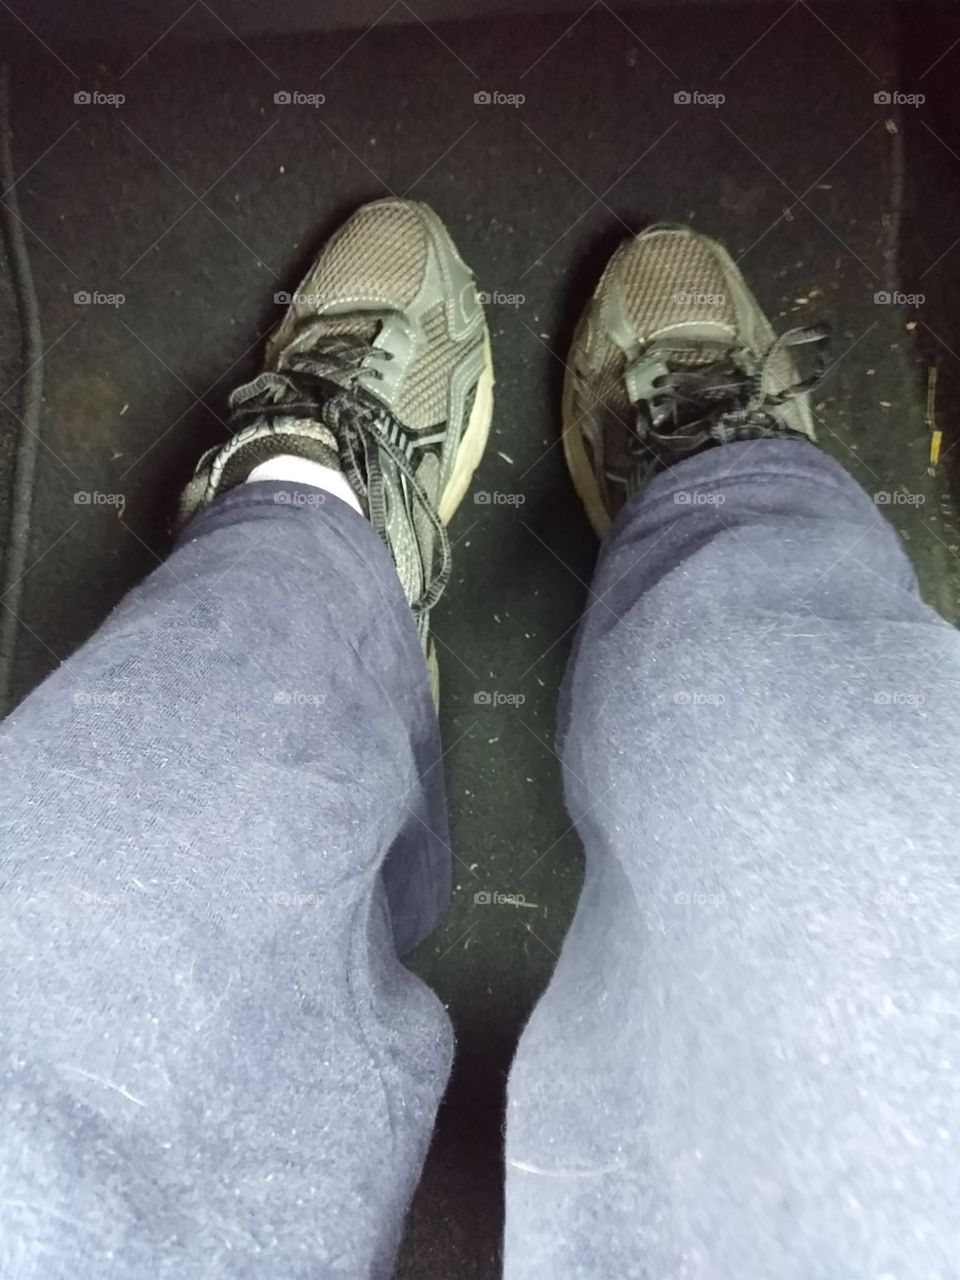 My Feet. On the floor board of the car